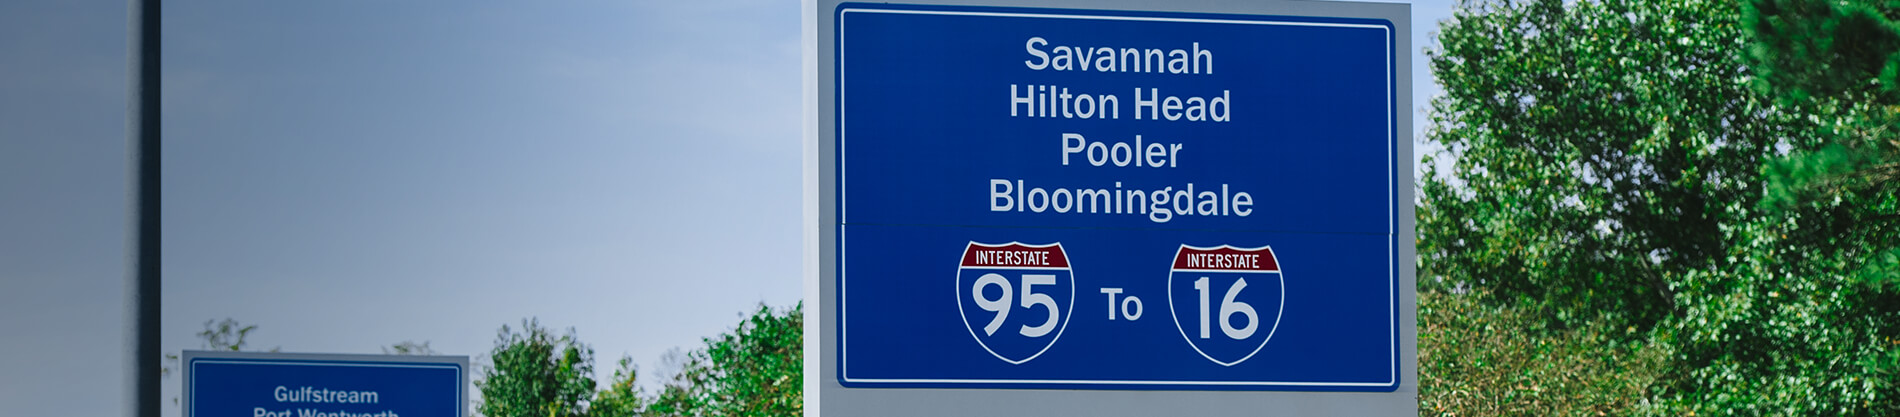 SAV Airport - Serving Hilton Head Island and the Savannah Area